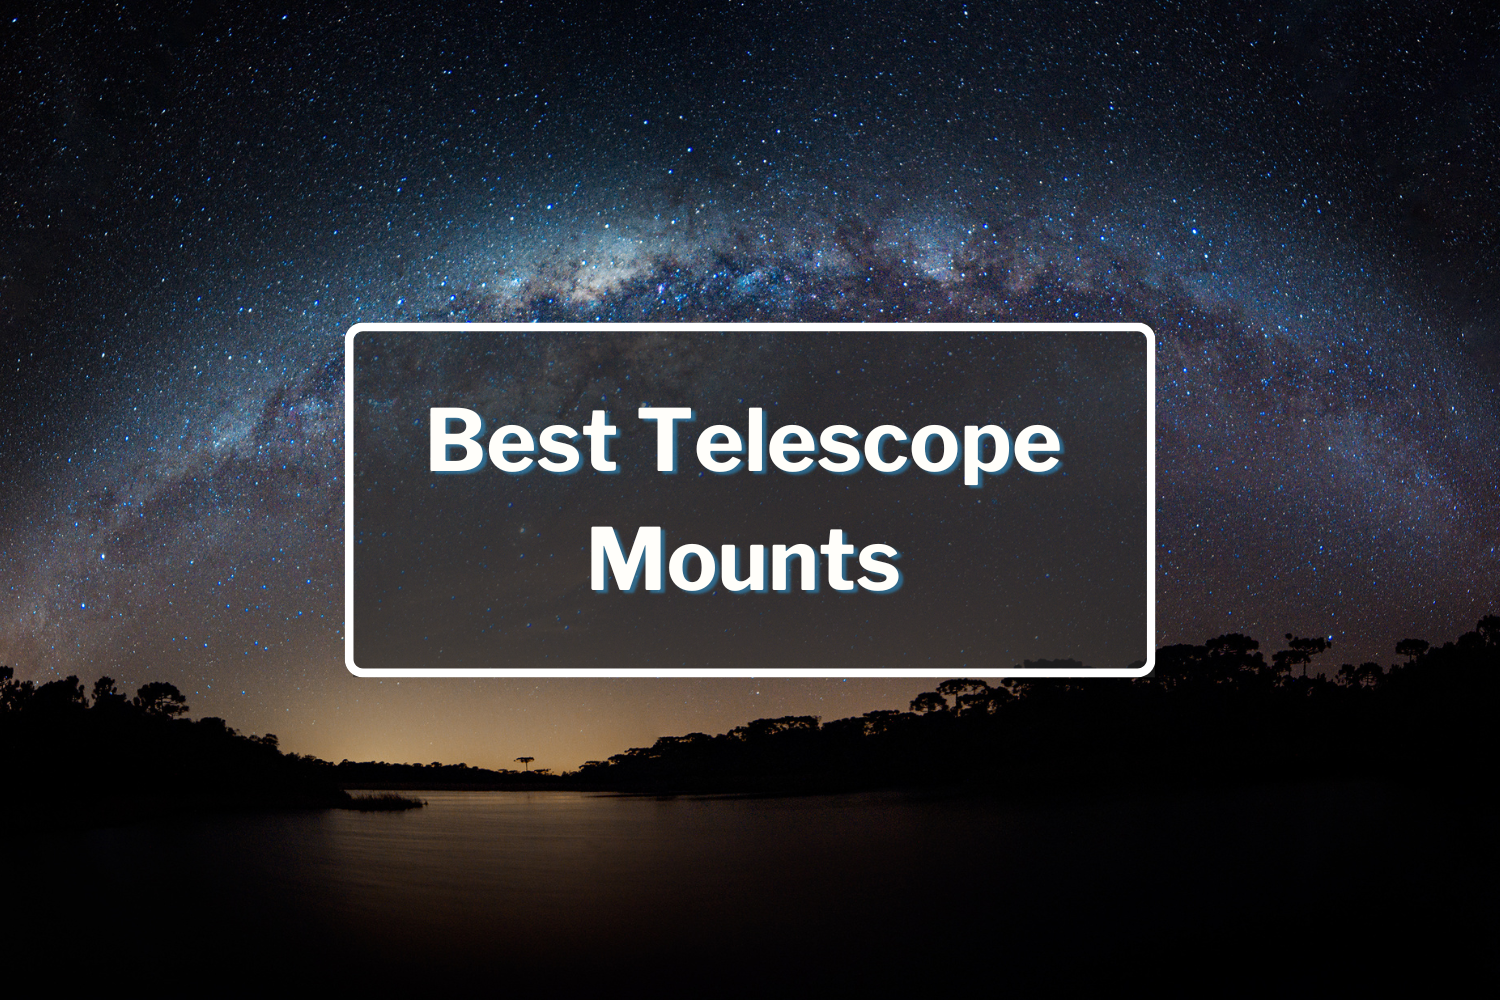 Best Telescope Mounts